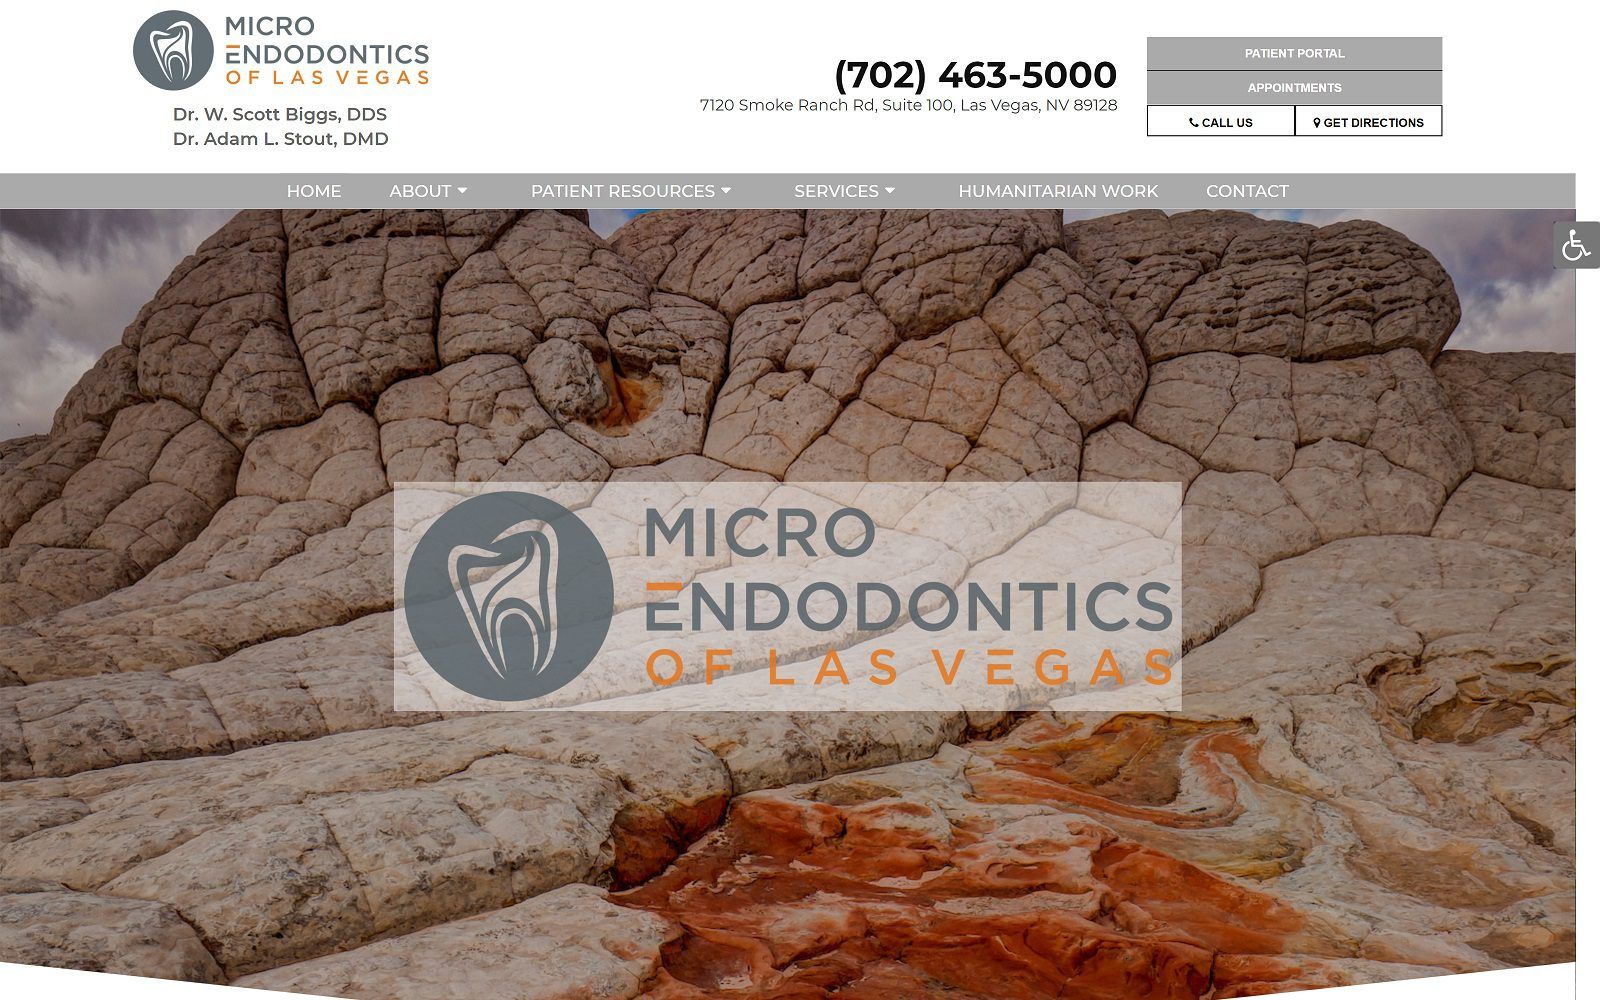 The screenshot of micro endodontics of las vegas website